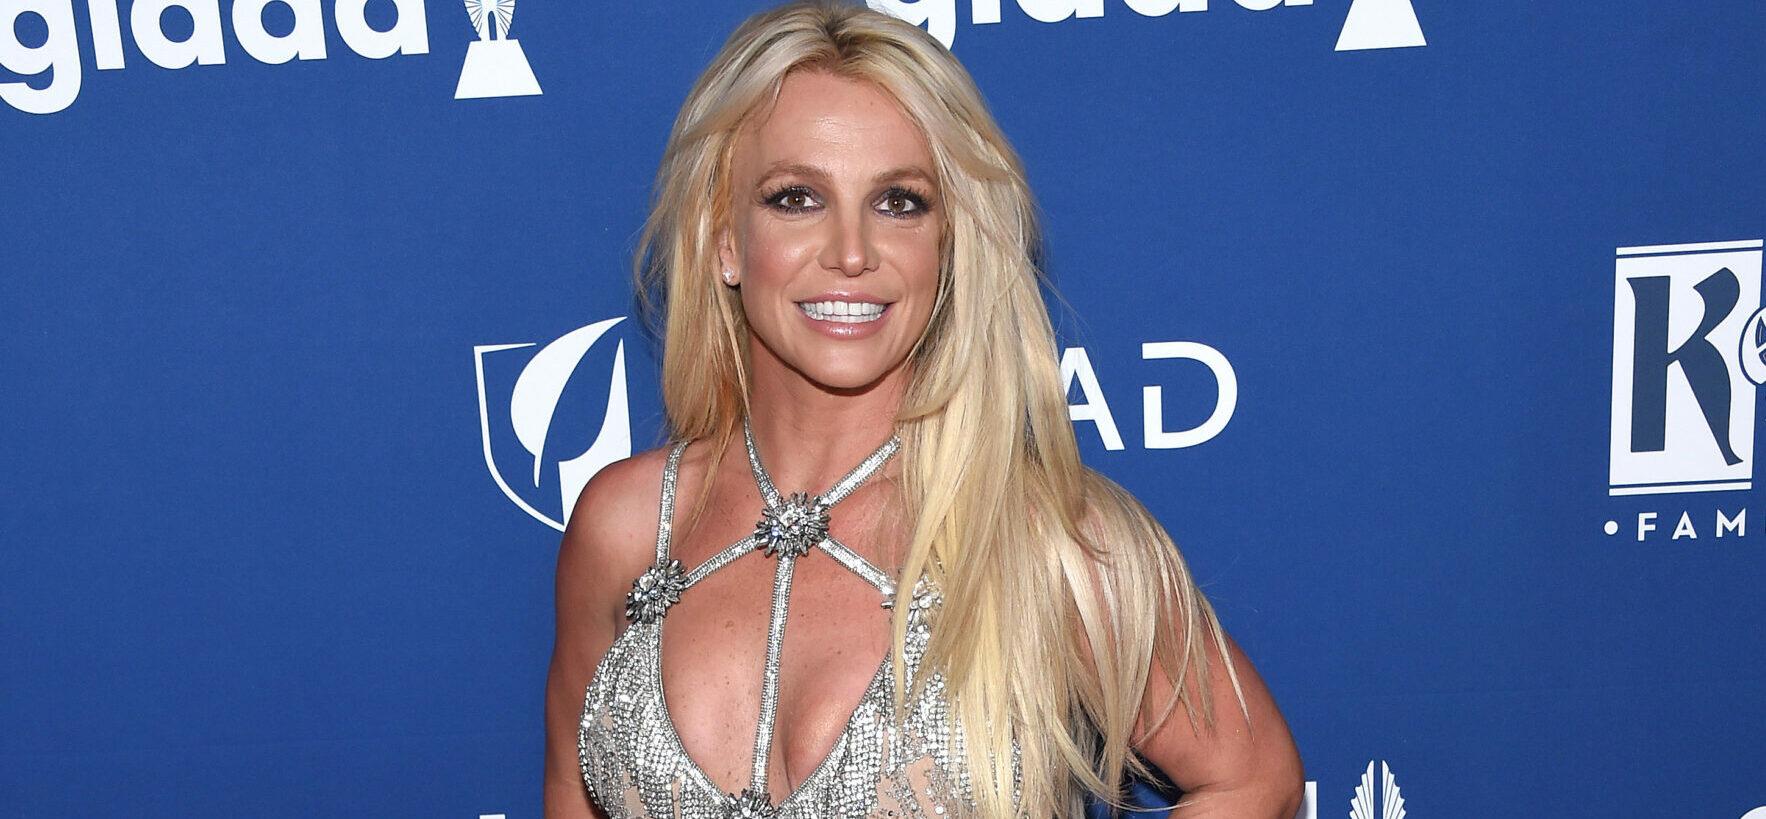 Britney Spears In Cheetah-Print Returns To Pole Dancing